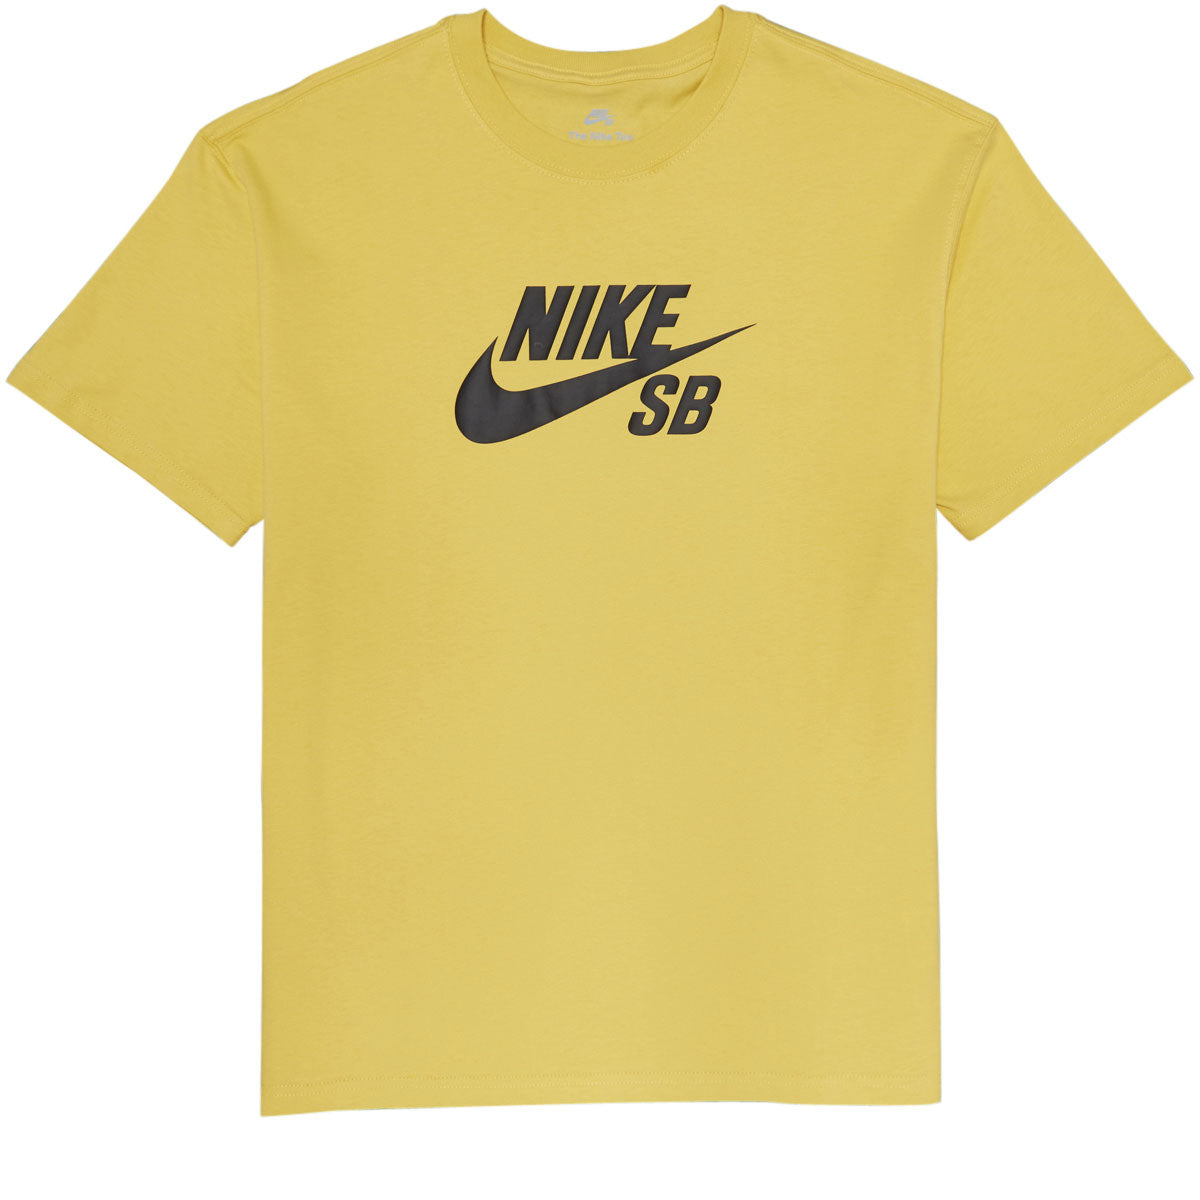 Nike SB Logo T-Shirt - Saturn Gold image 1